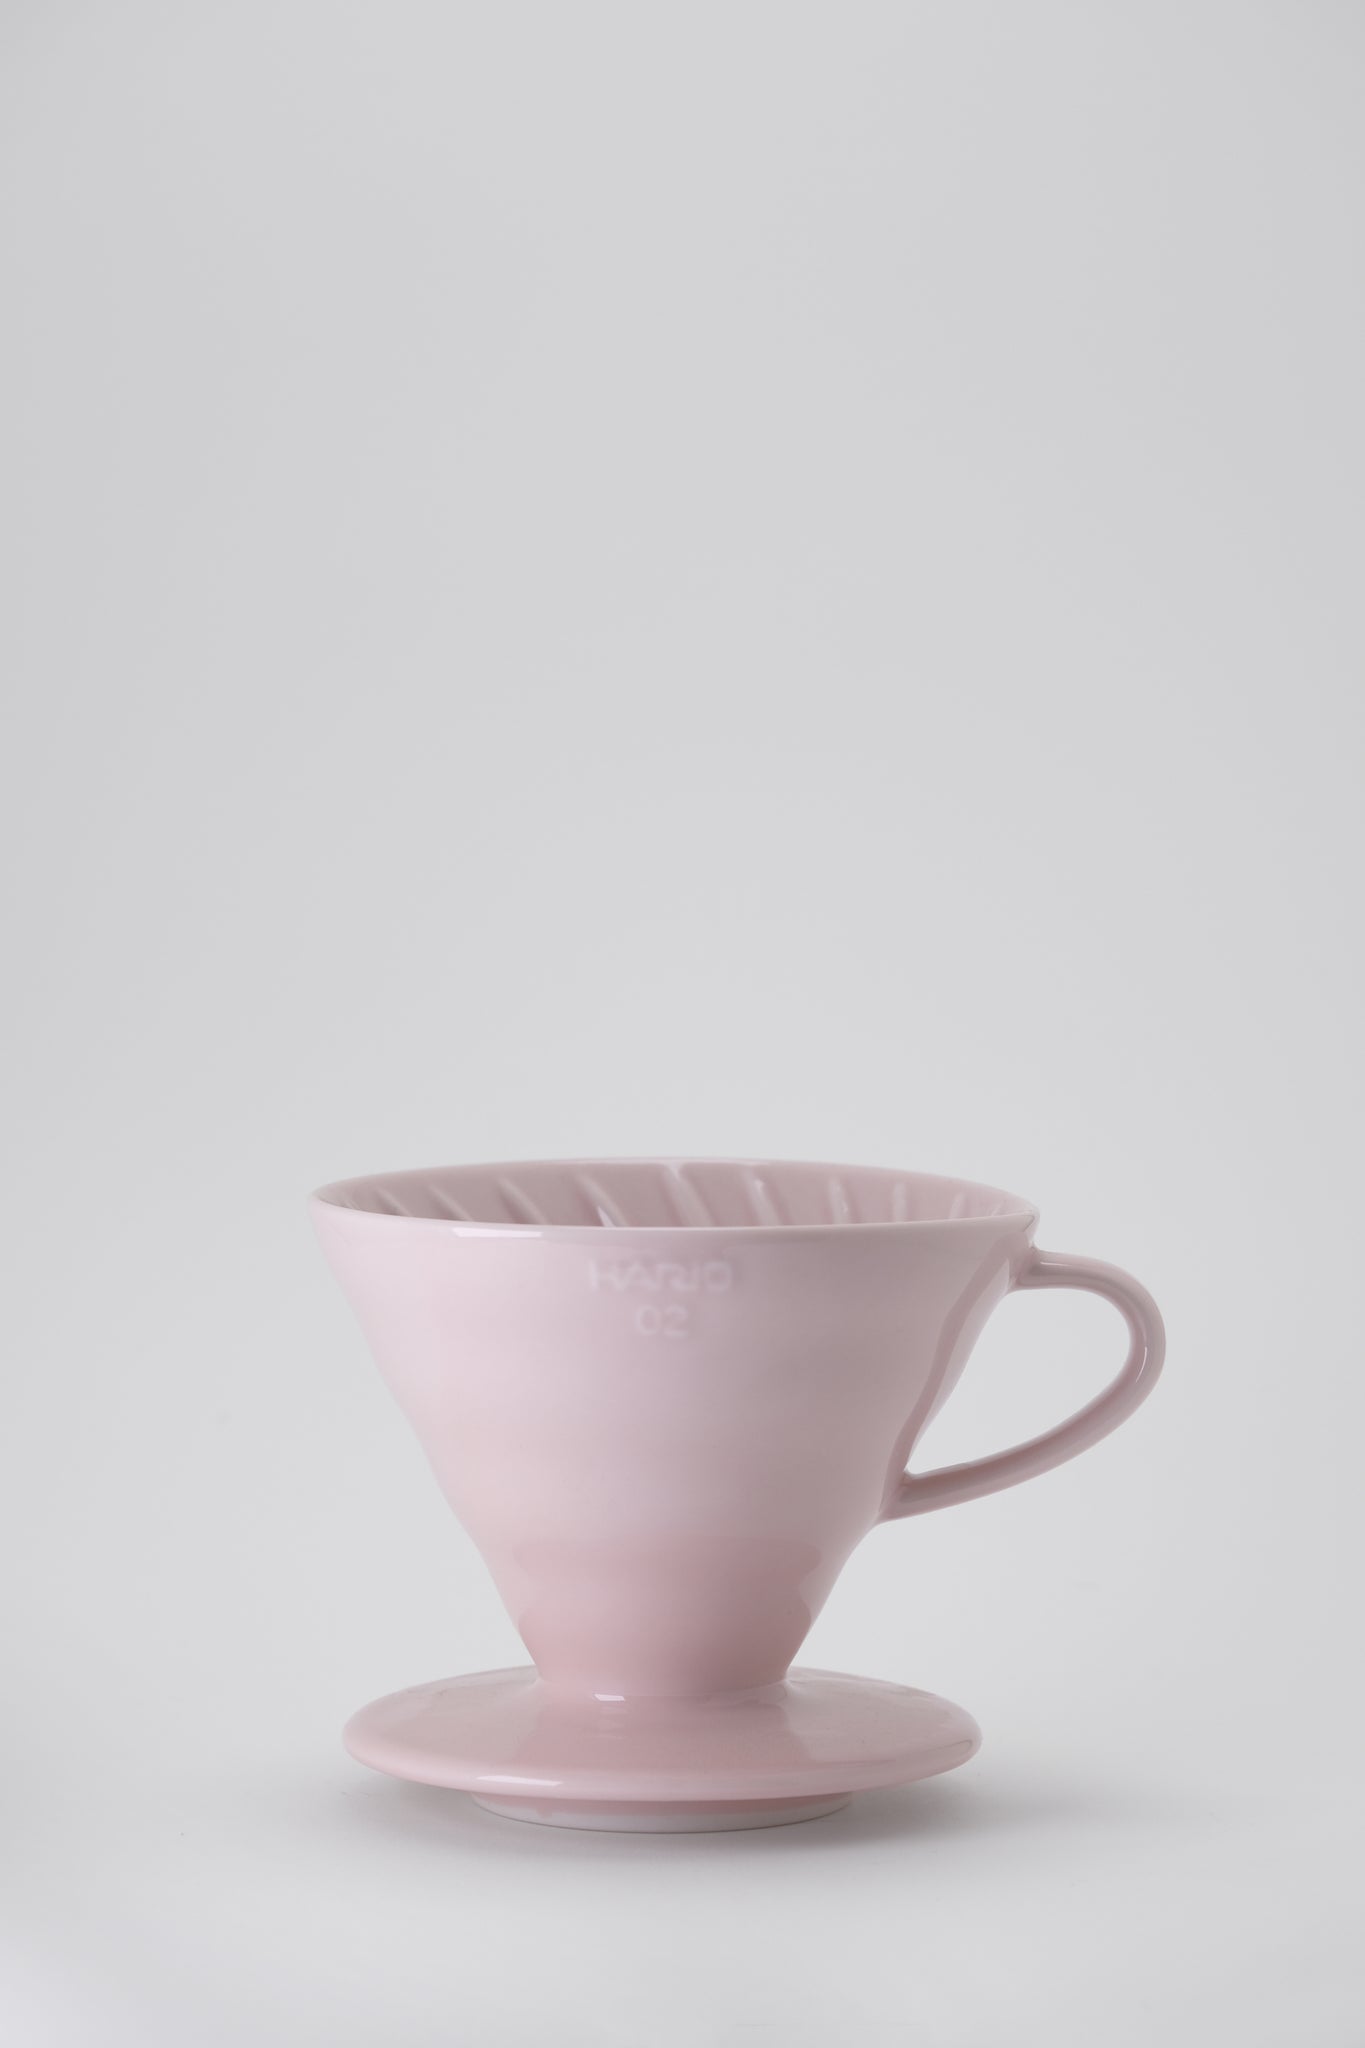 V60 ceramic dripper 02 pink-Hario-[interior]-[design]-KIOSK48TH